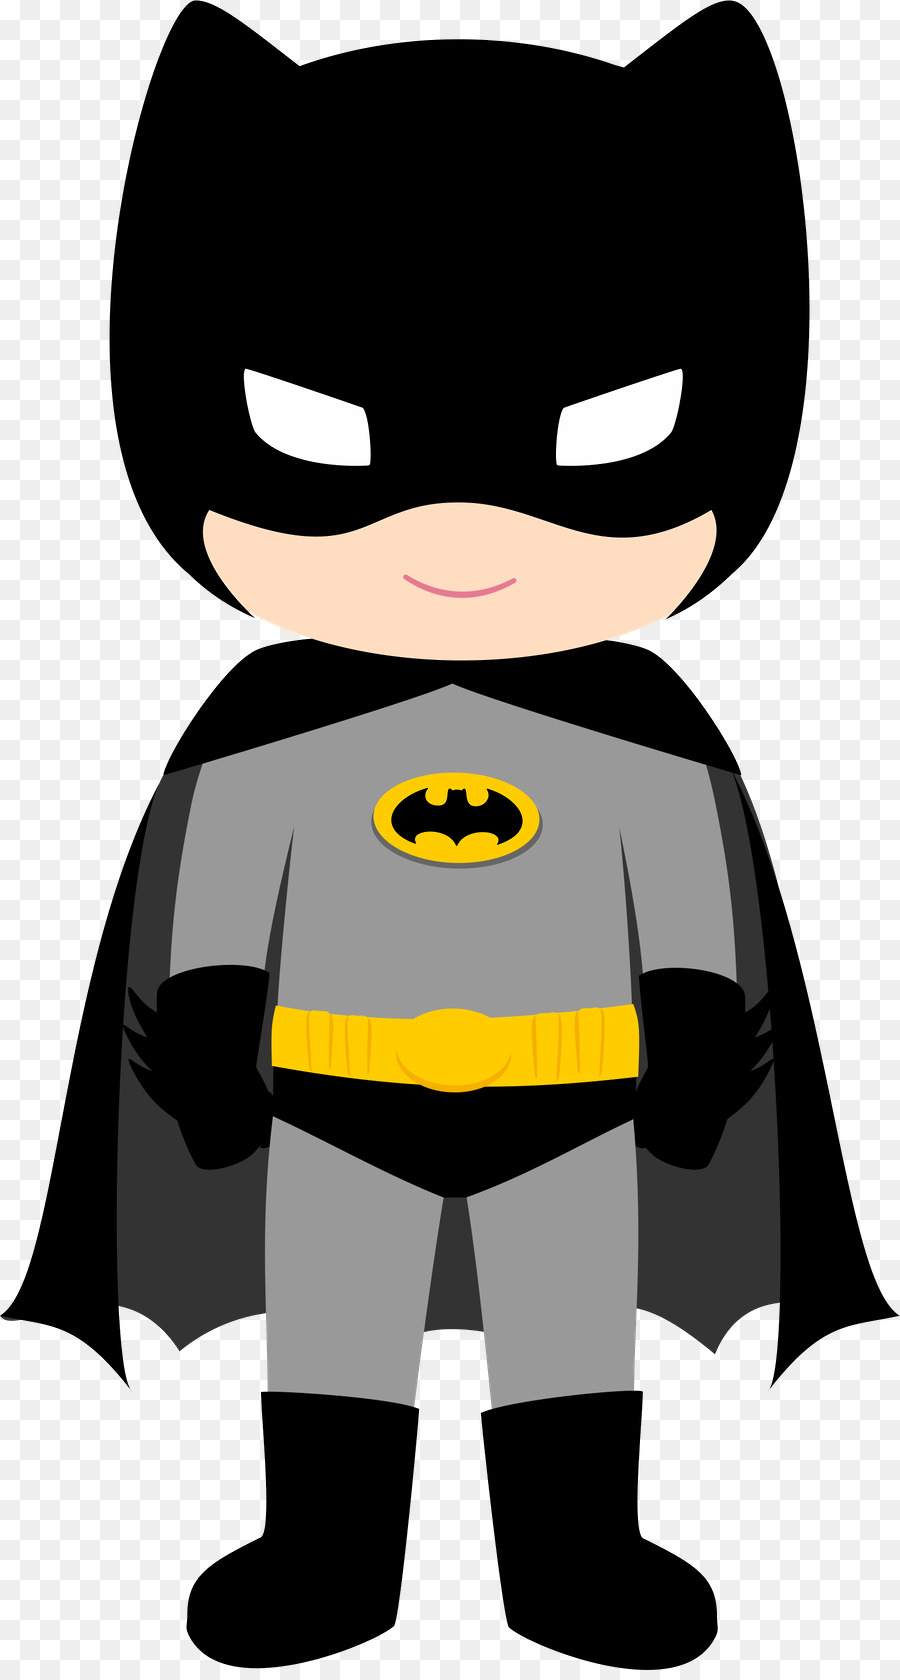 Batman Robin Superhero Clip art - batman